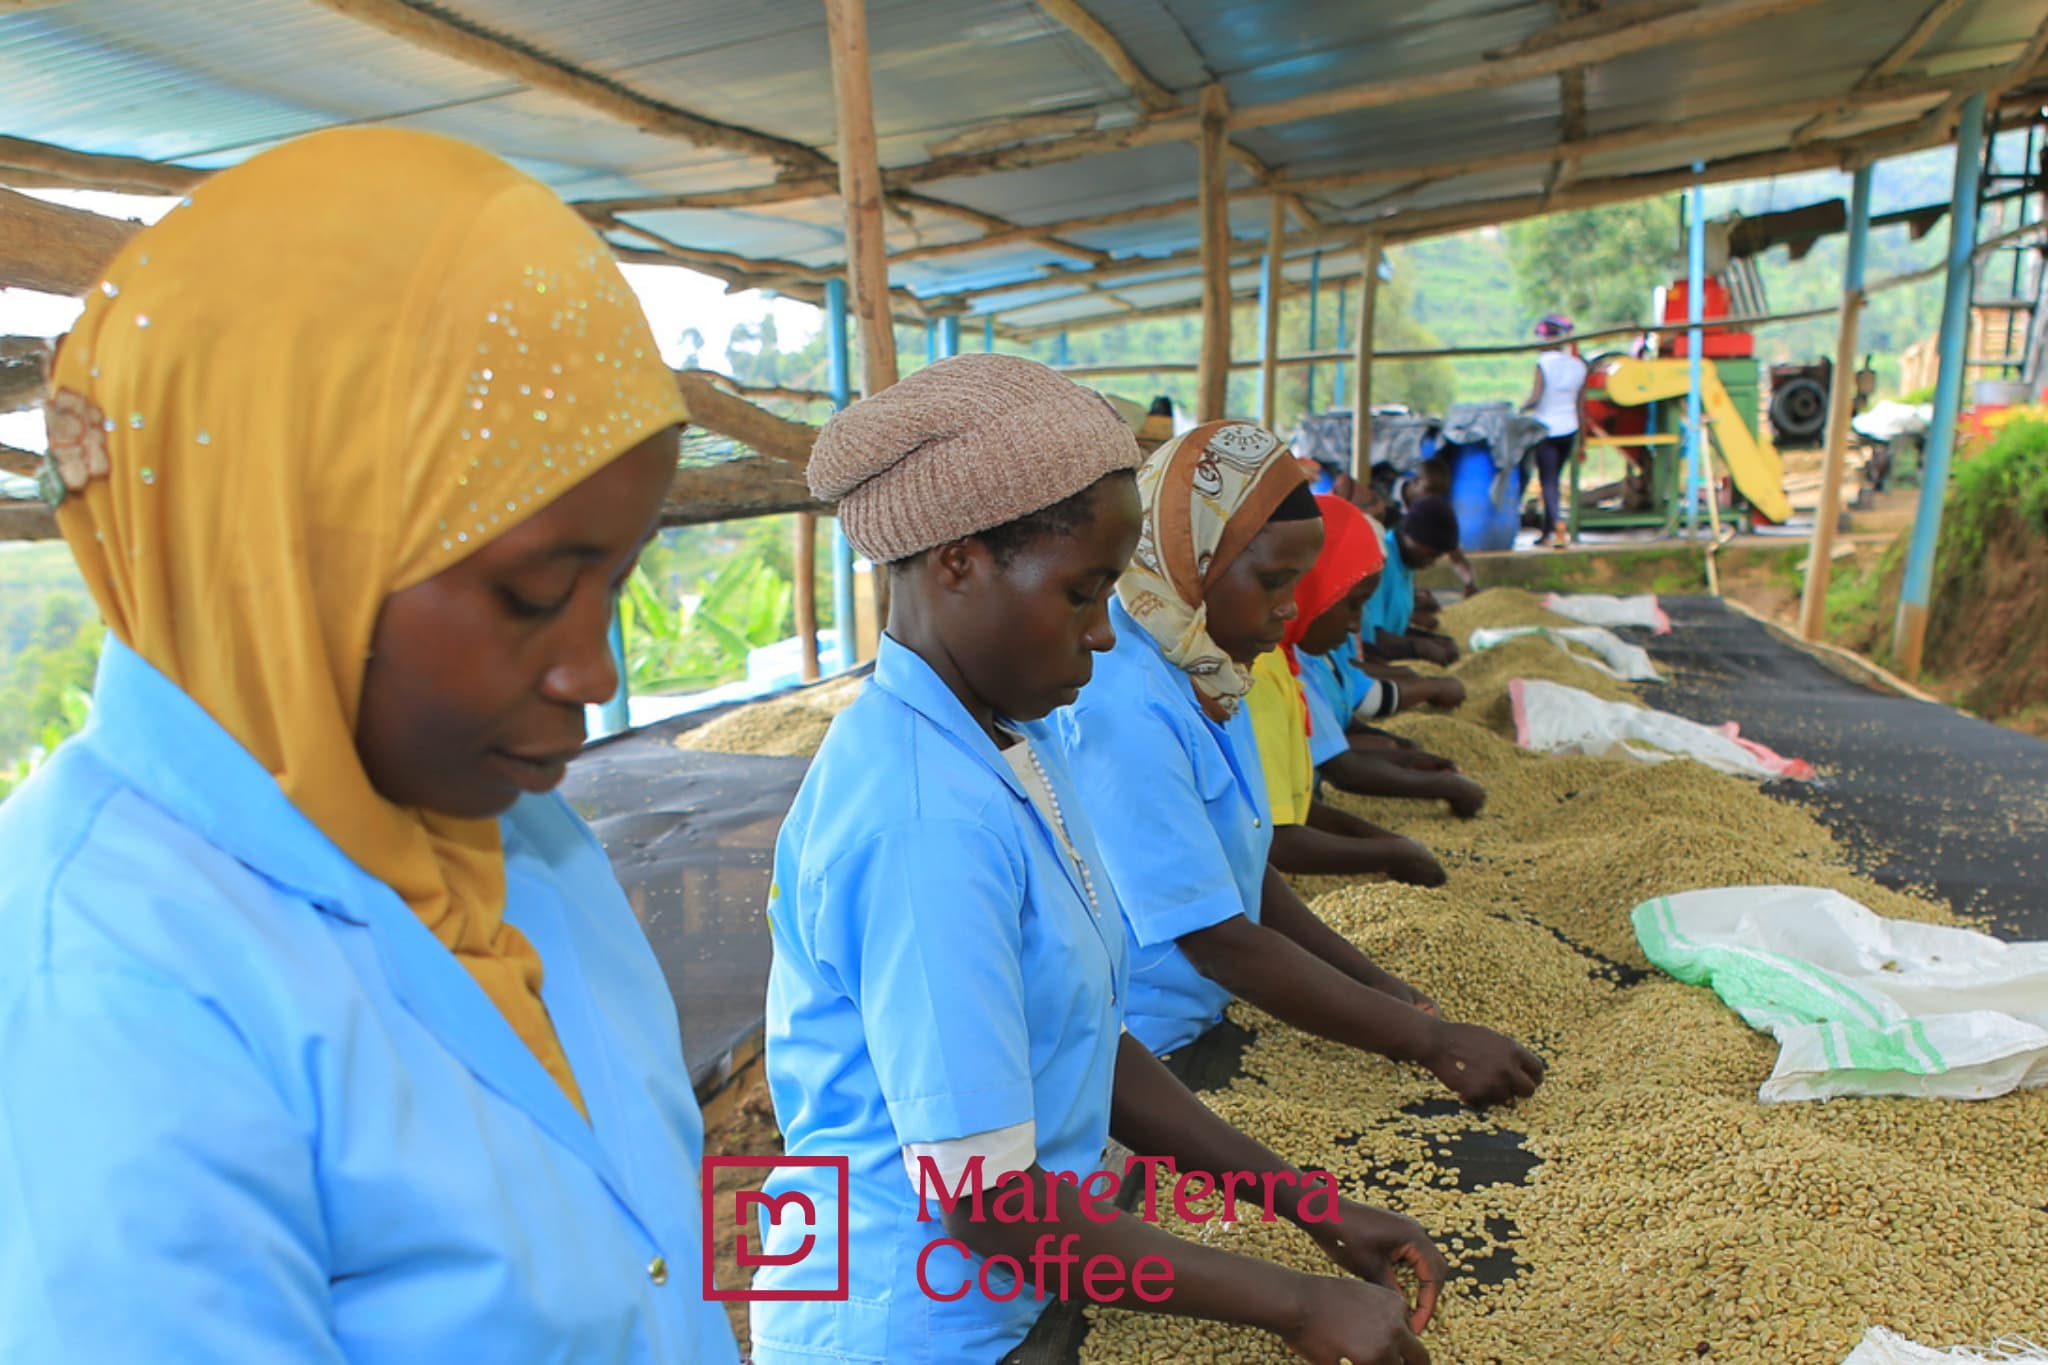 Green coffee harvesters from Rwanda